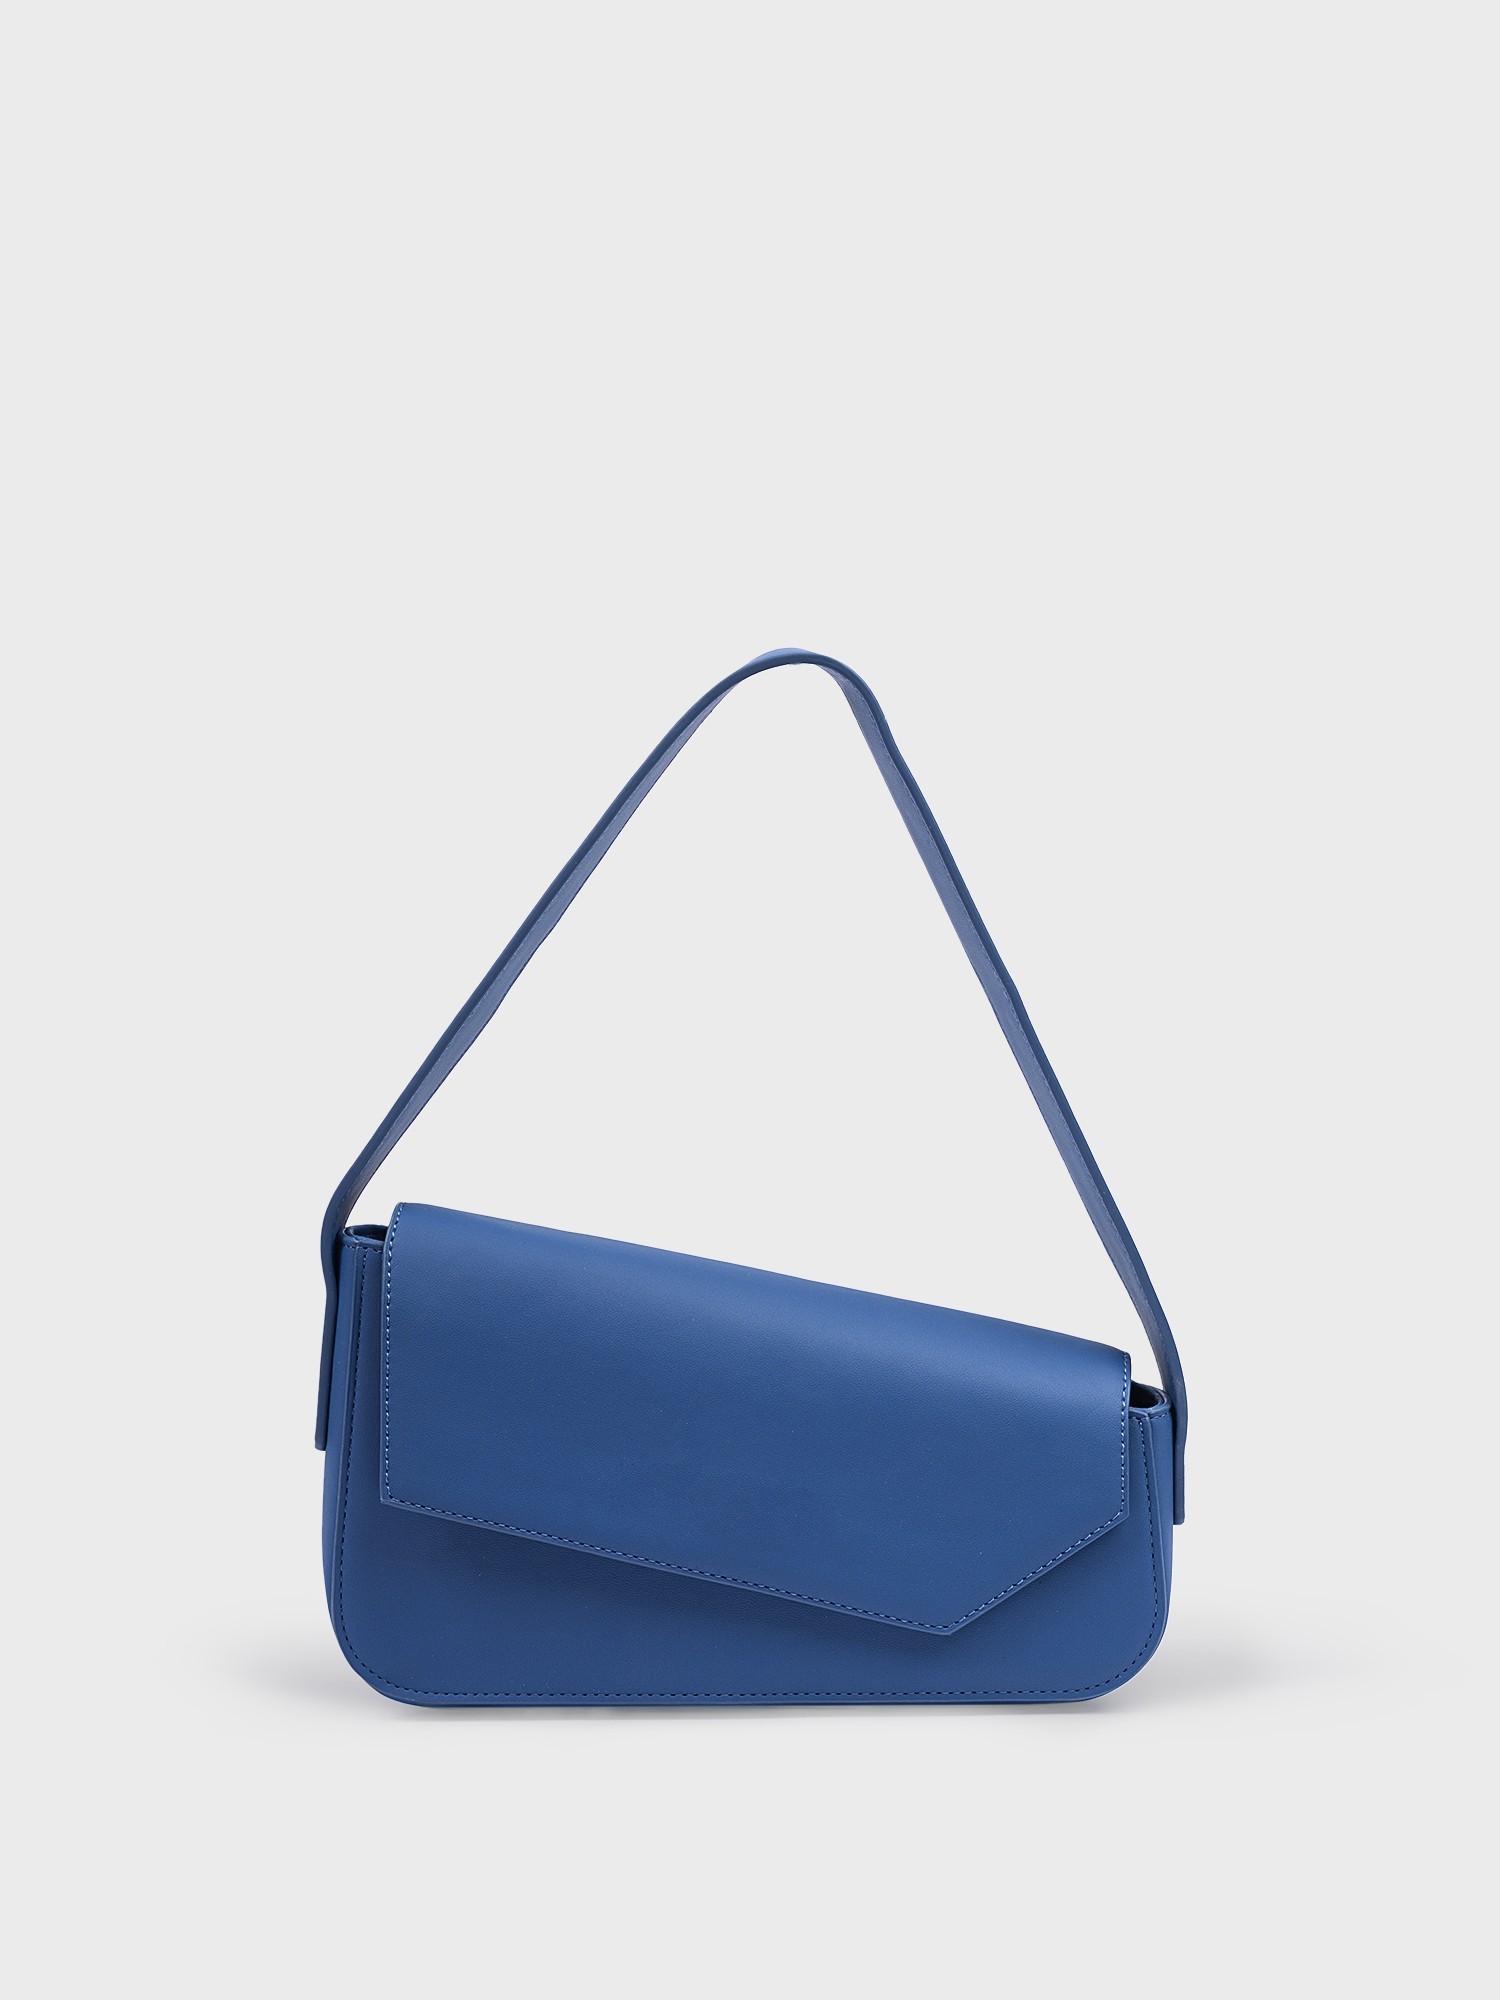 Асимметричная сумка синяя ELIS BG0060, цвет синий - фото 1